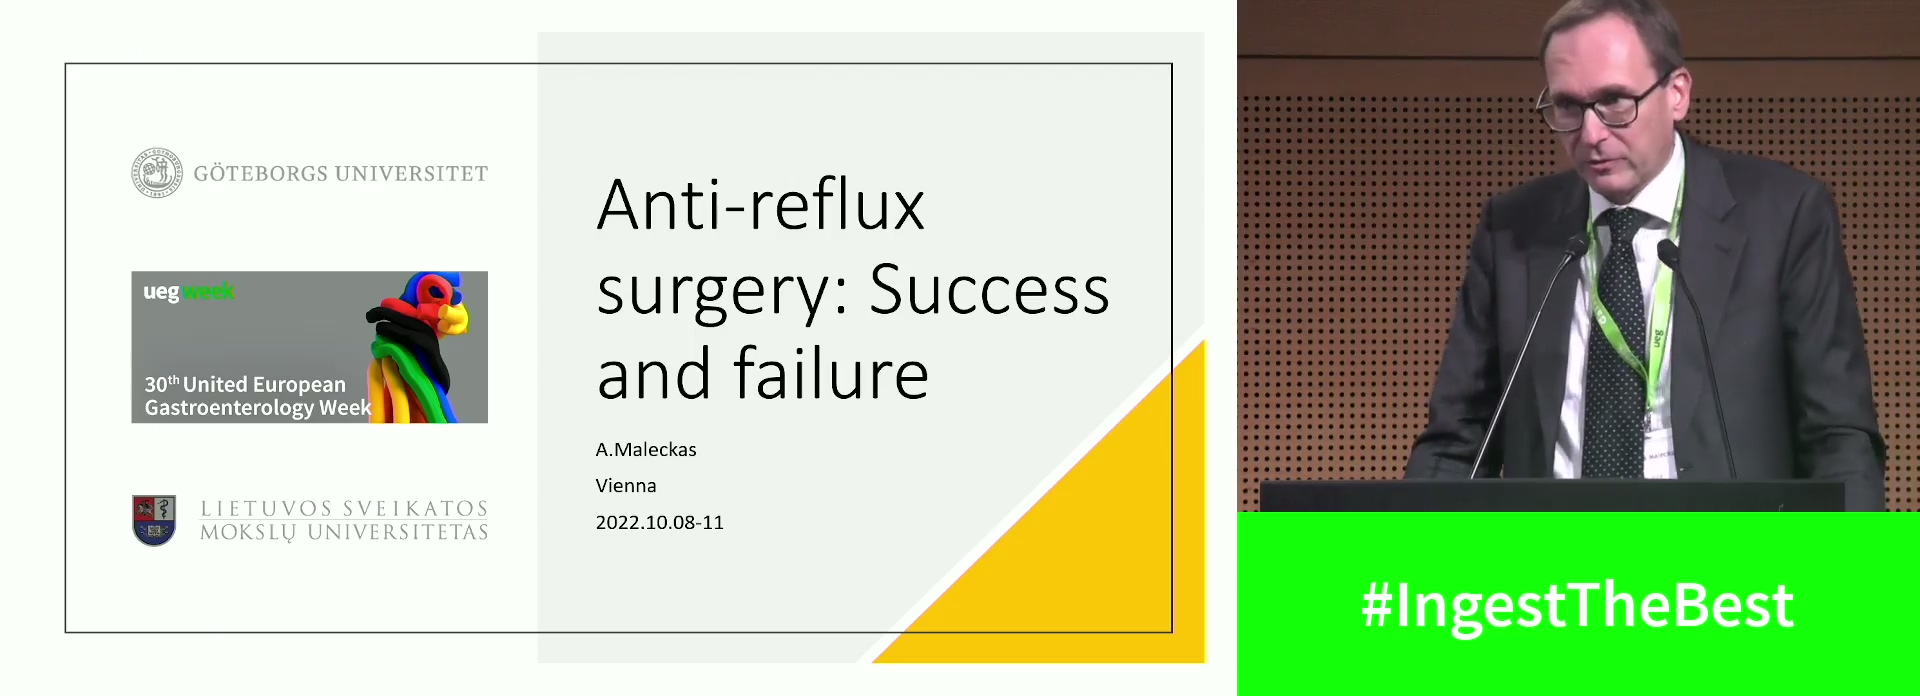 Anti-reflux surgery: Success and failure